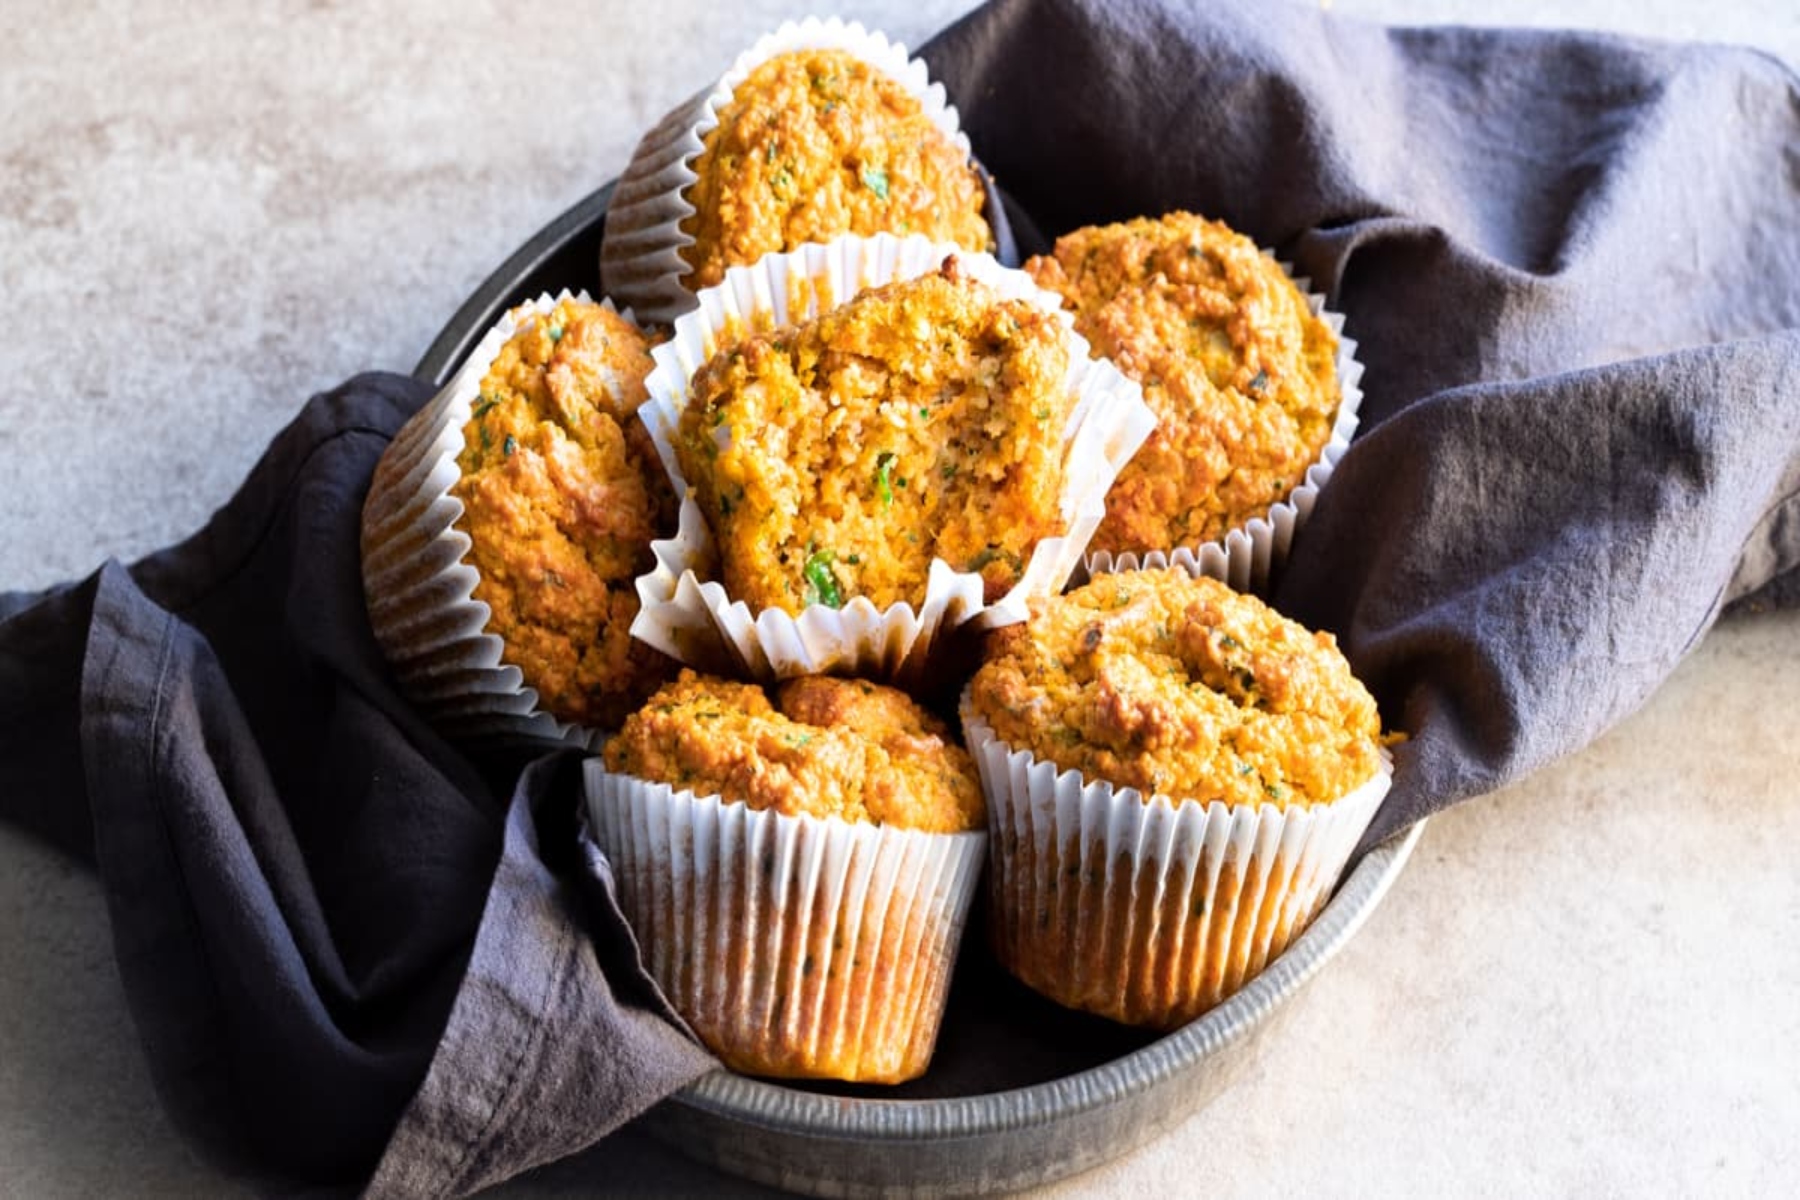 Muffins γλυκοπατάτα: Αλμυρά μάφιν με γλυκοπατάτα και αβοκάντο για το πιο χορταστικό brunch